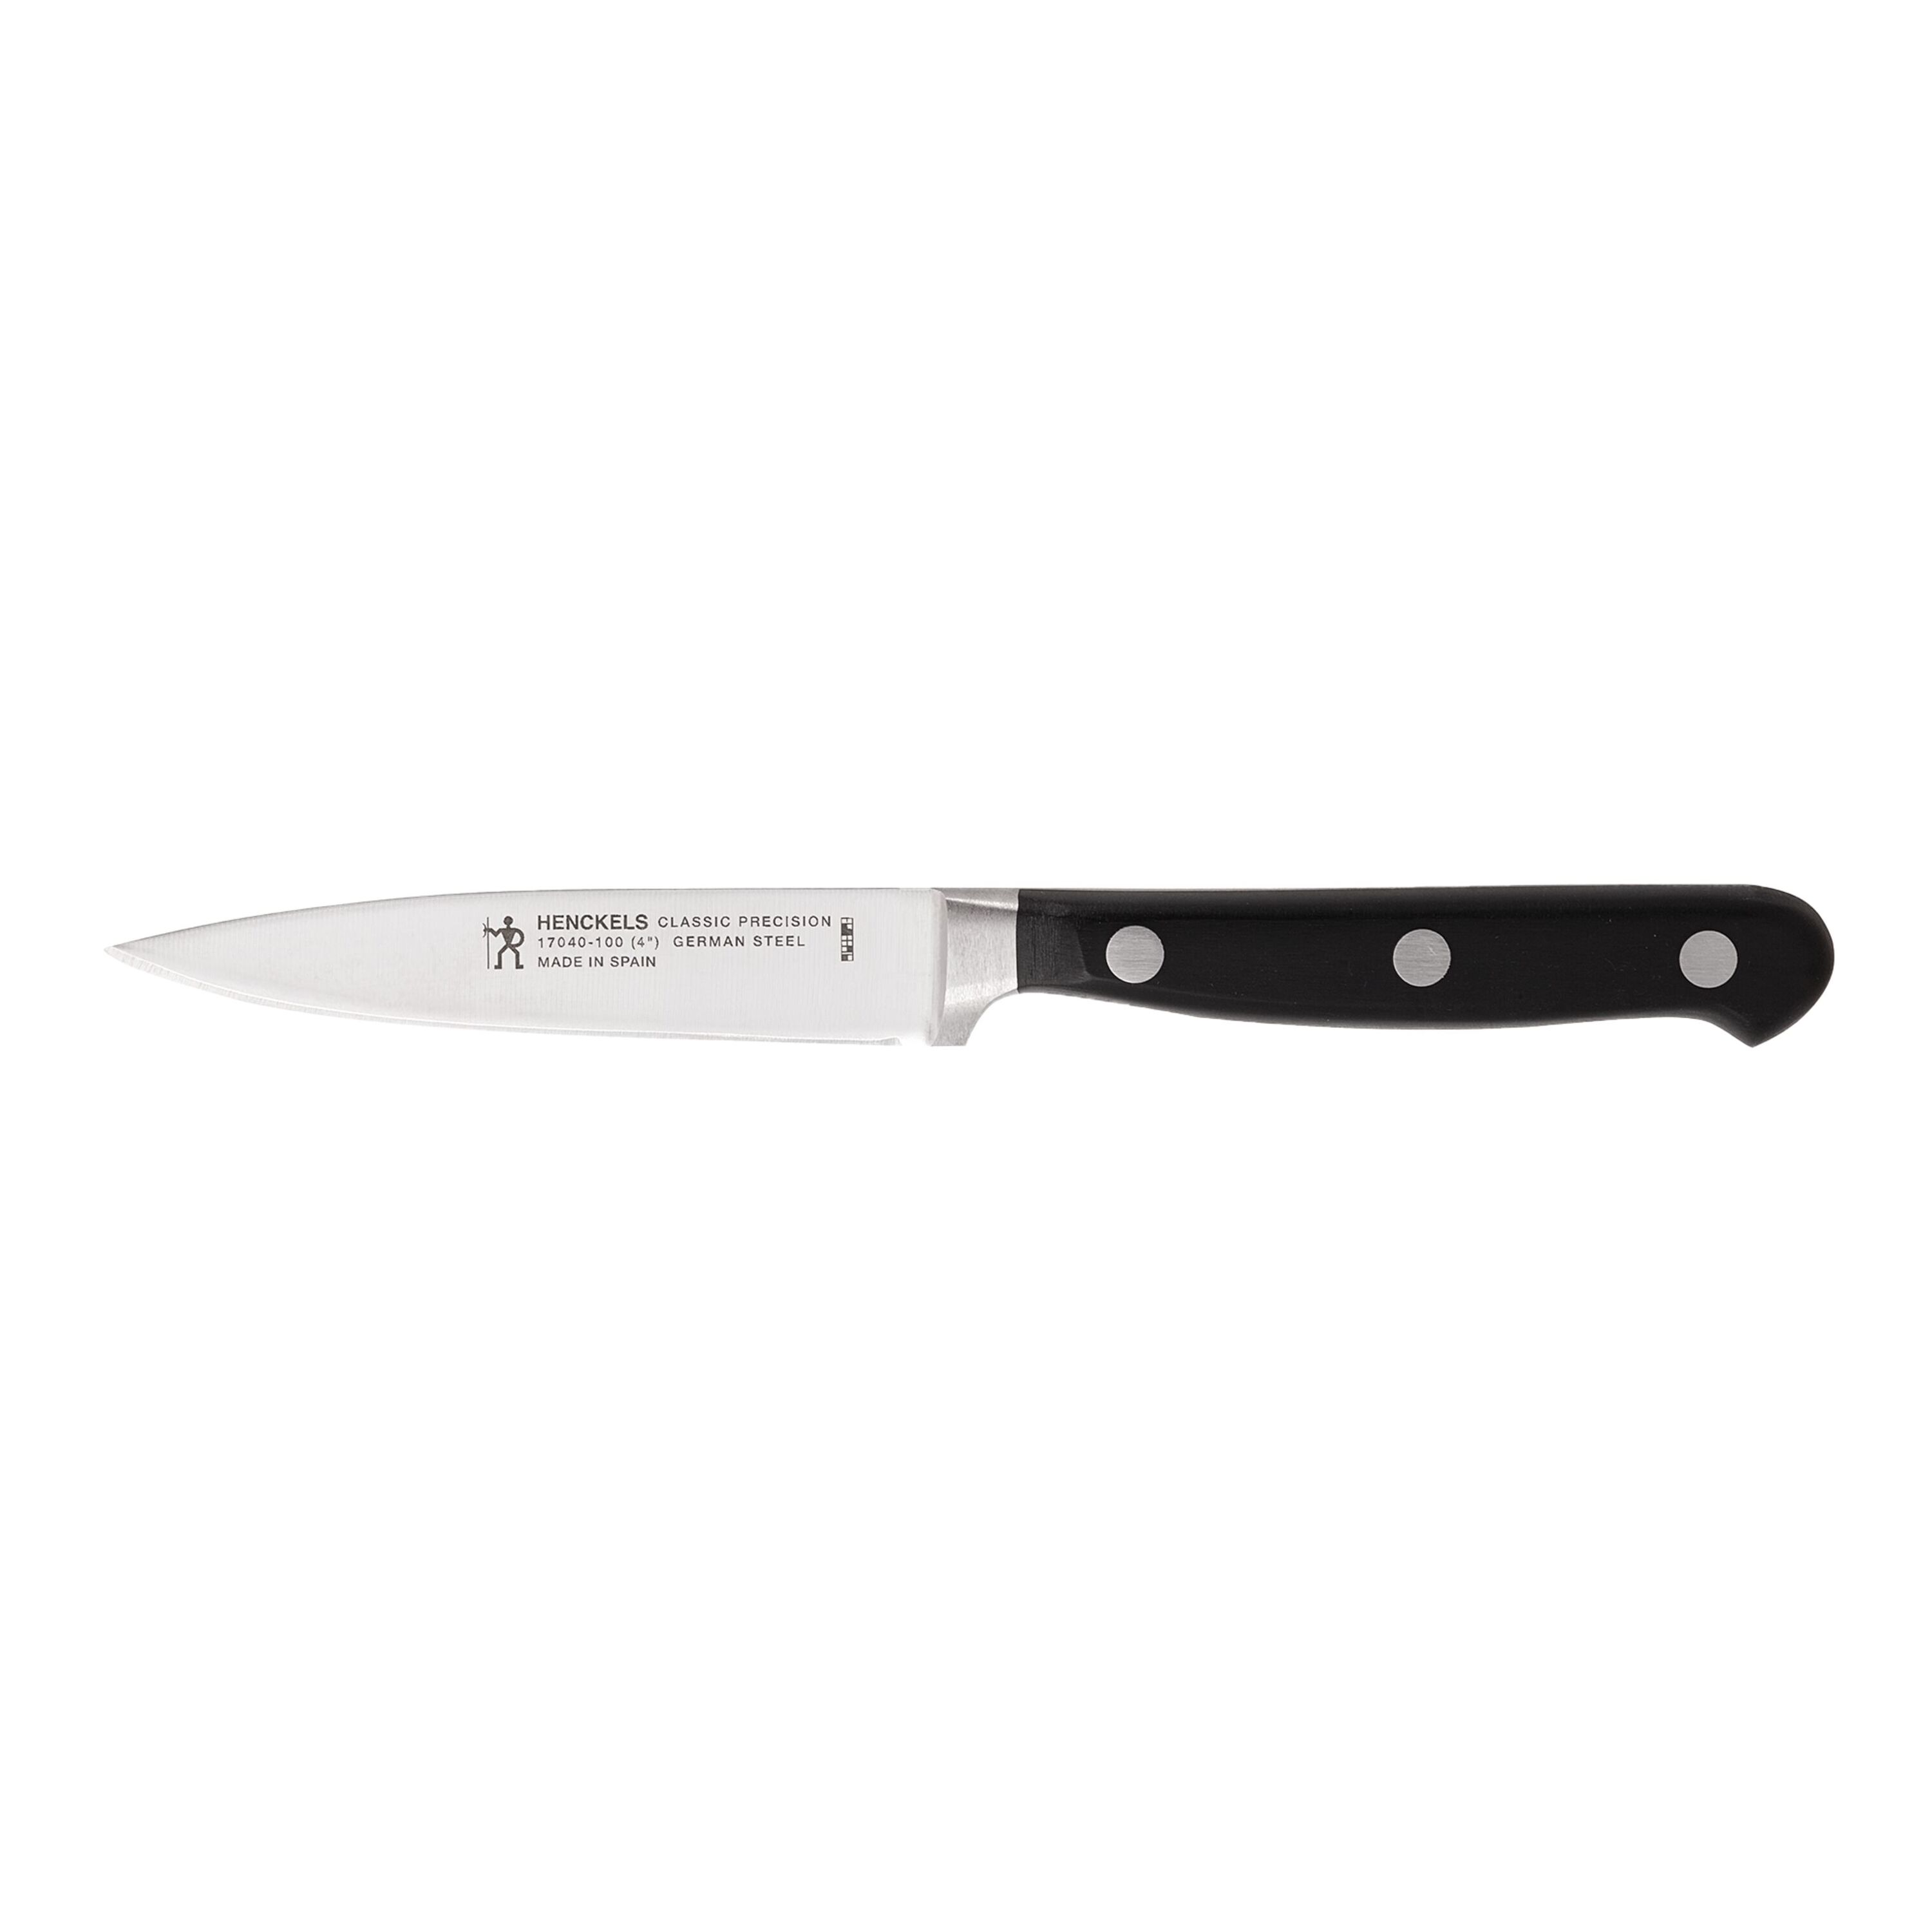  Advanced Ceramic Paring Knife - 4 Inch Blade Never